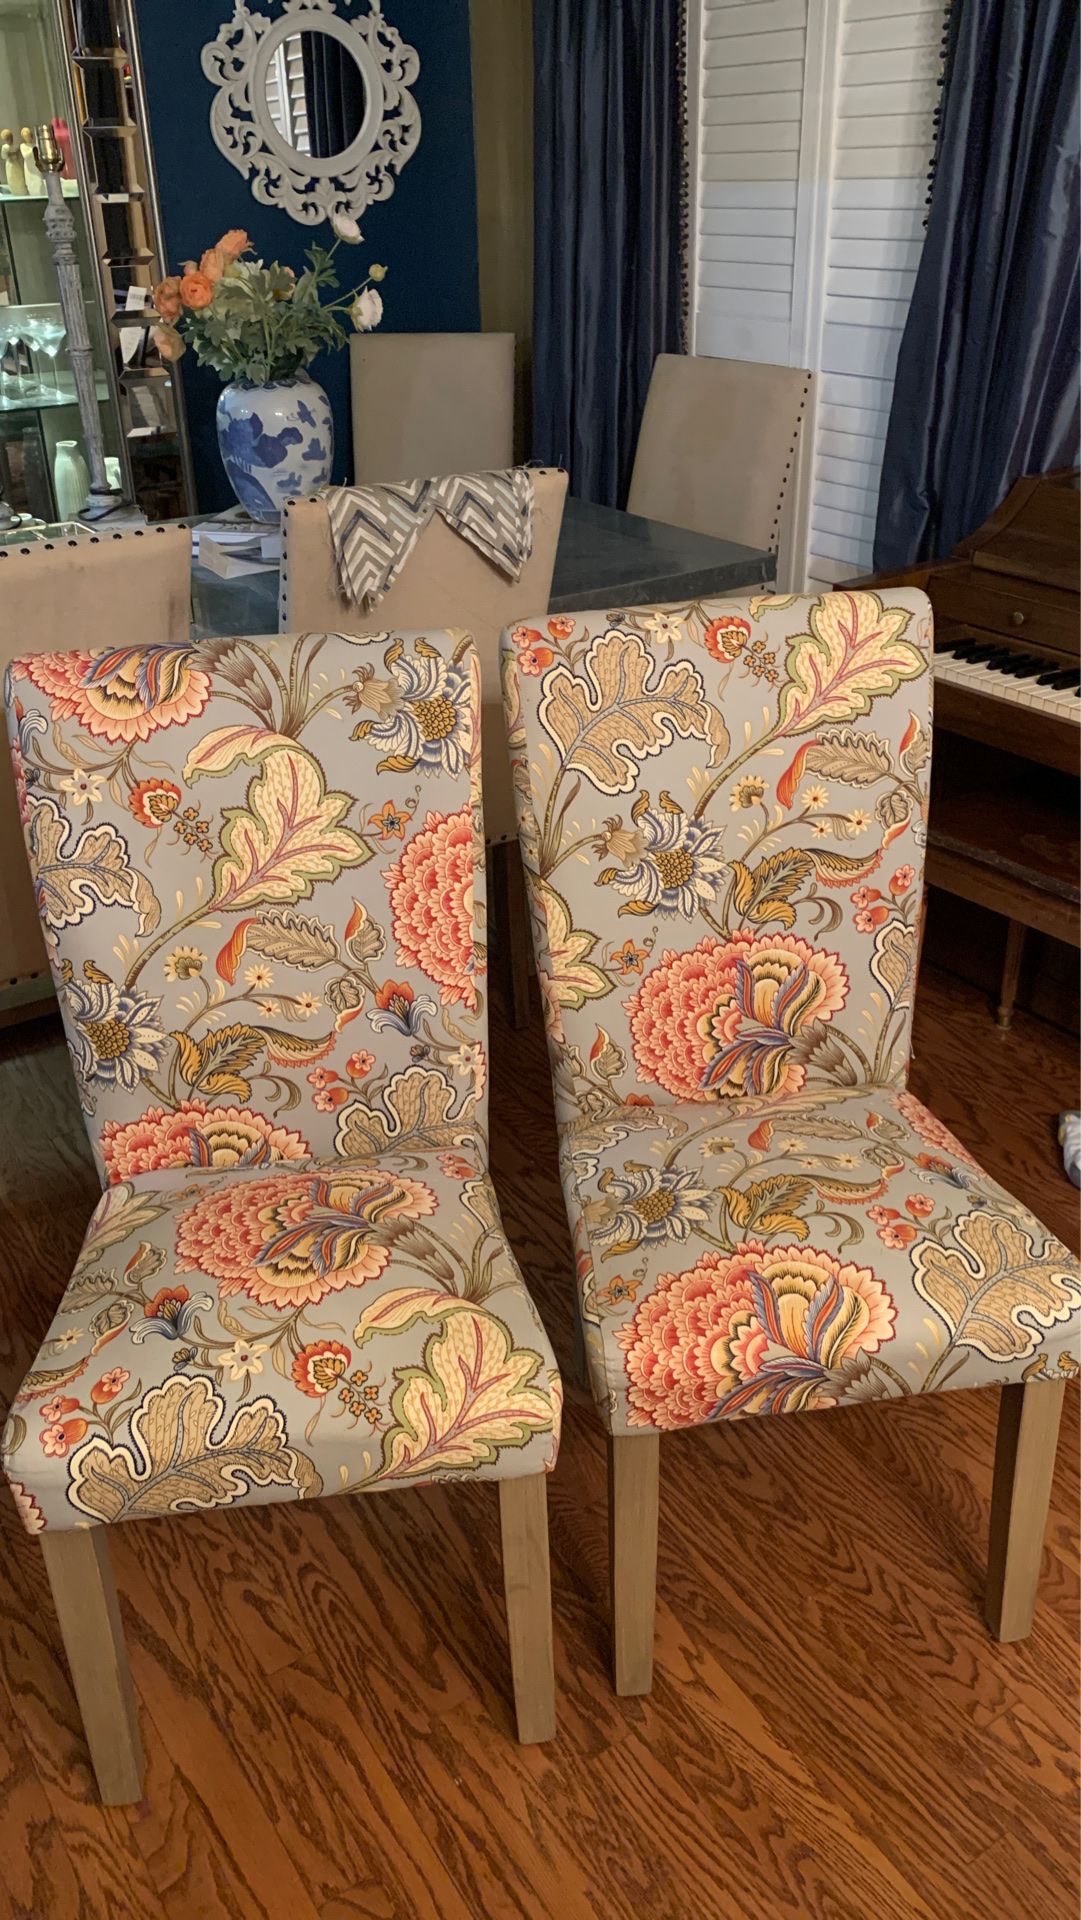 Pair of Kirkland’s chairs